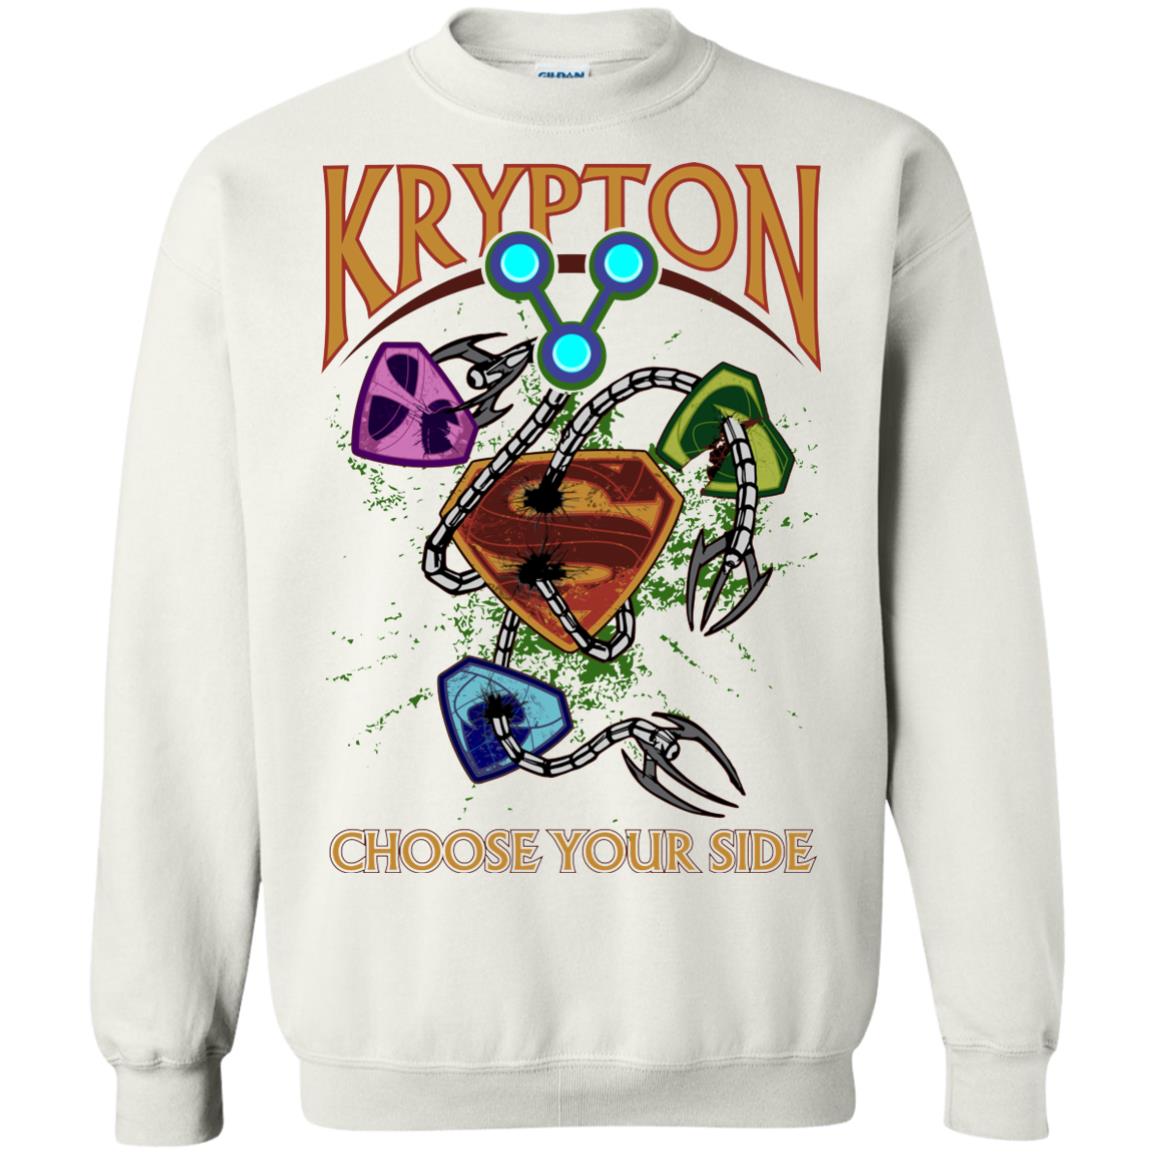 Chose your Side Krypton Crewneck Pullover Sweatshirt  8 oz.